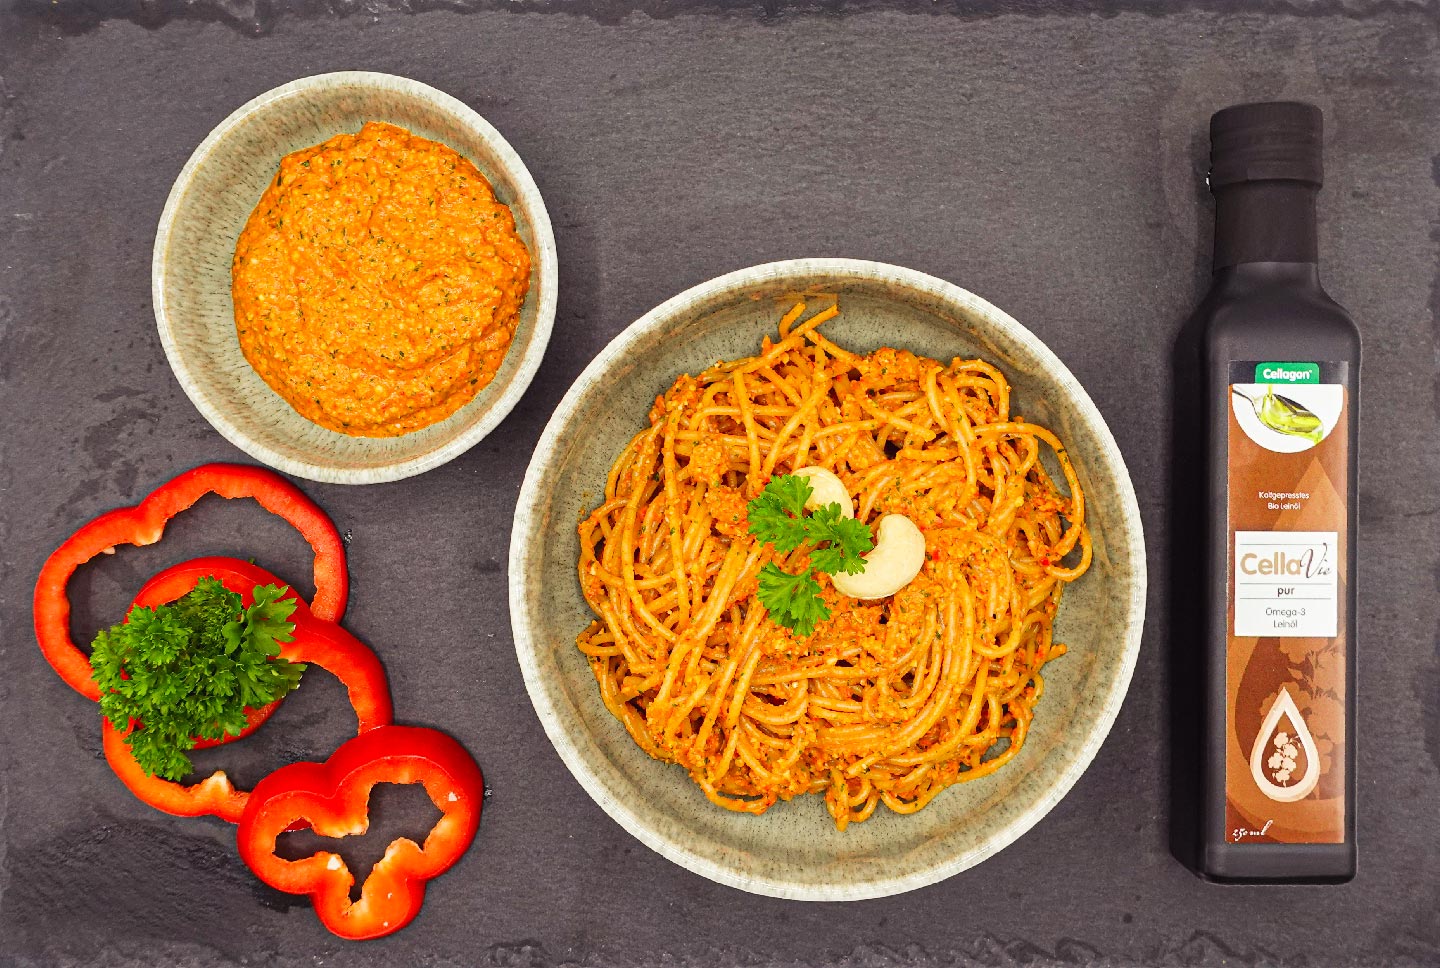 Pasta mit Paprika-Pesto und Cellagon CellaVie pur